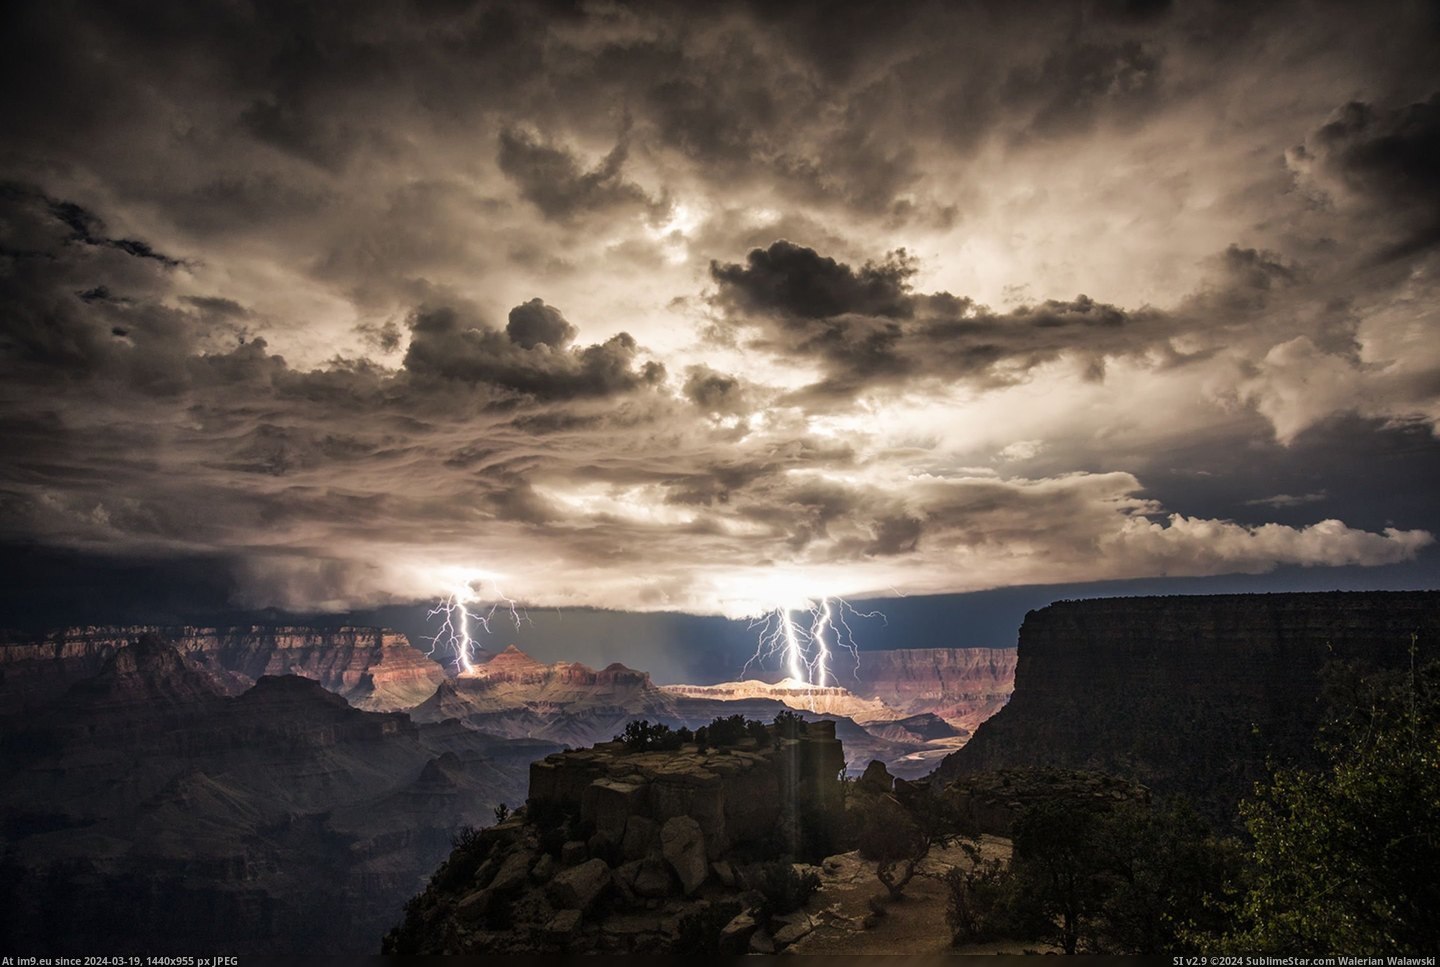 #Canyon #Thunderstorm #Nighttime #Grand [Pics] Nighttime thunderstorm over the Grand Canyon Pic. (Obraz z album My r/PICS favs))